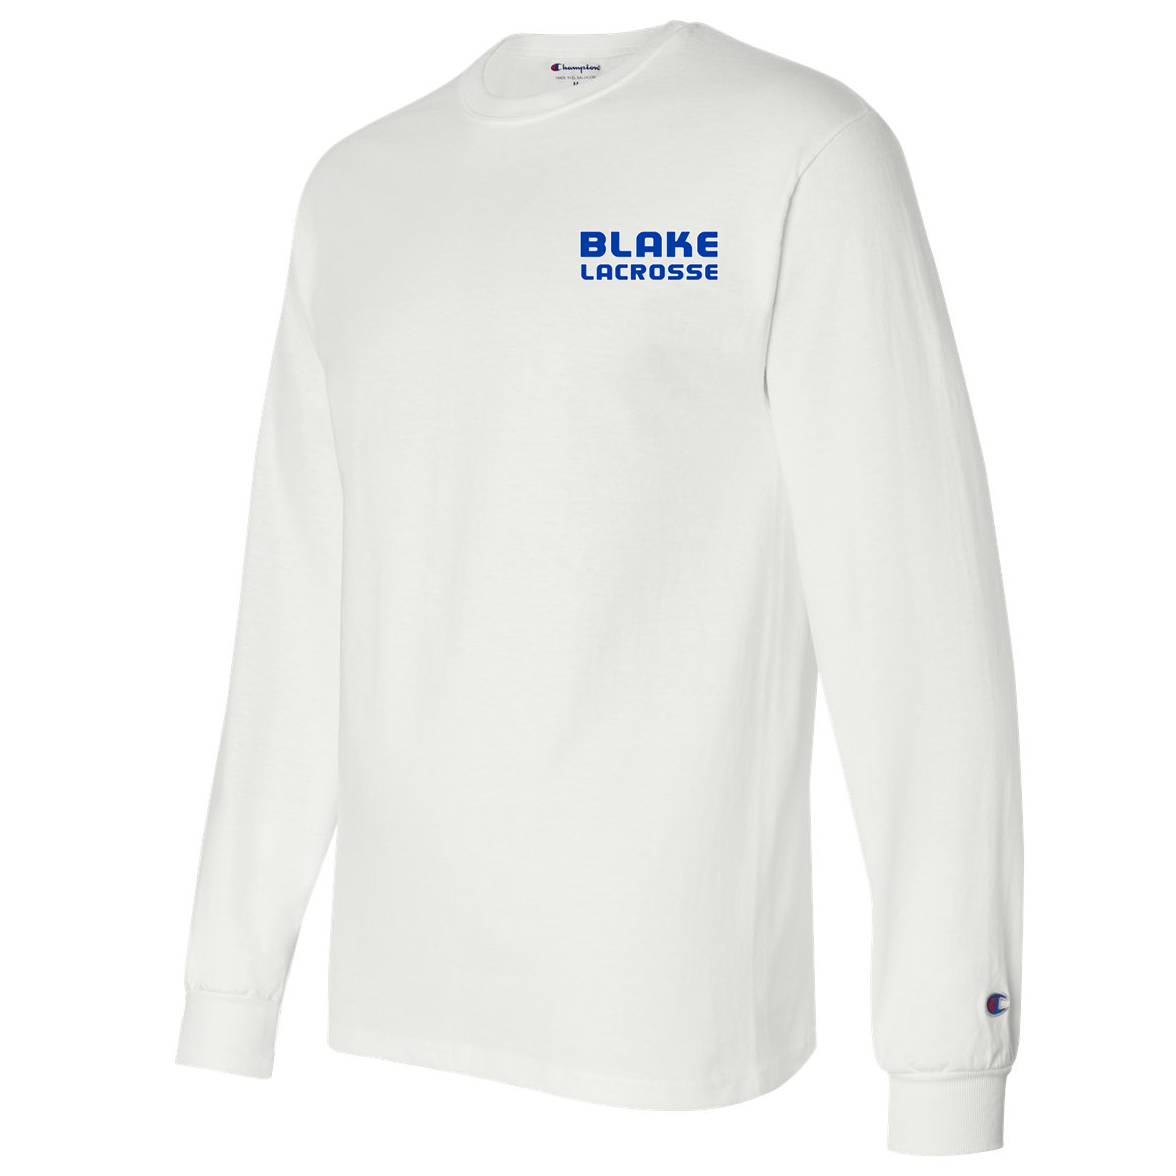 Blake Lacrosse Champion Long Sleeve T-Shirt